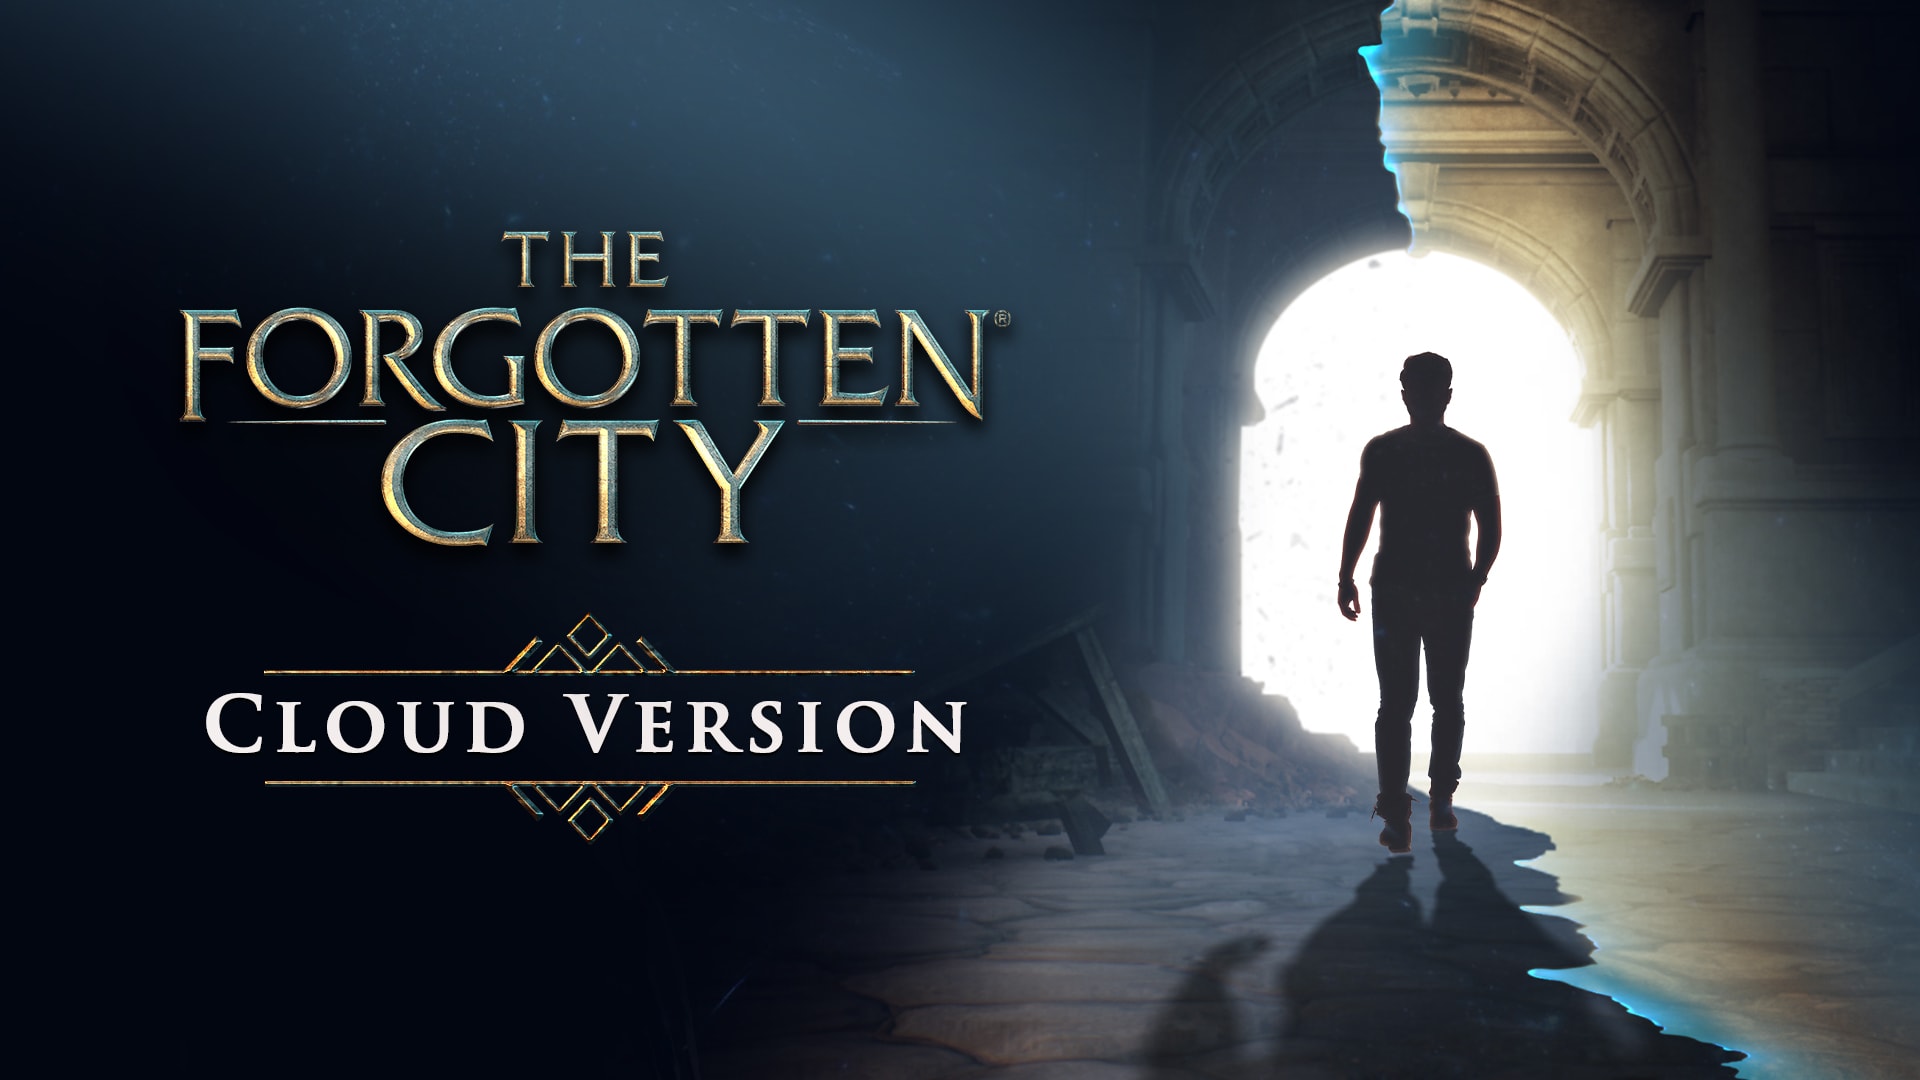 The Forgotten City - Cloud Version